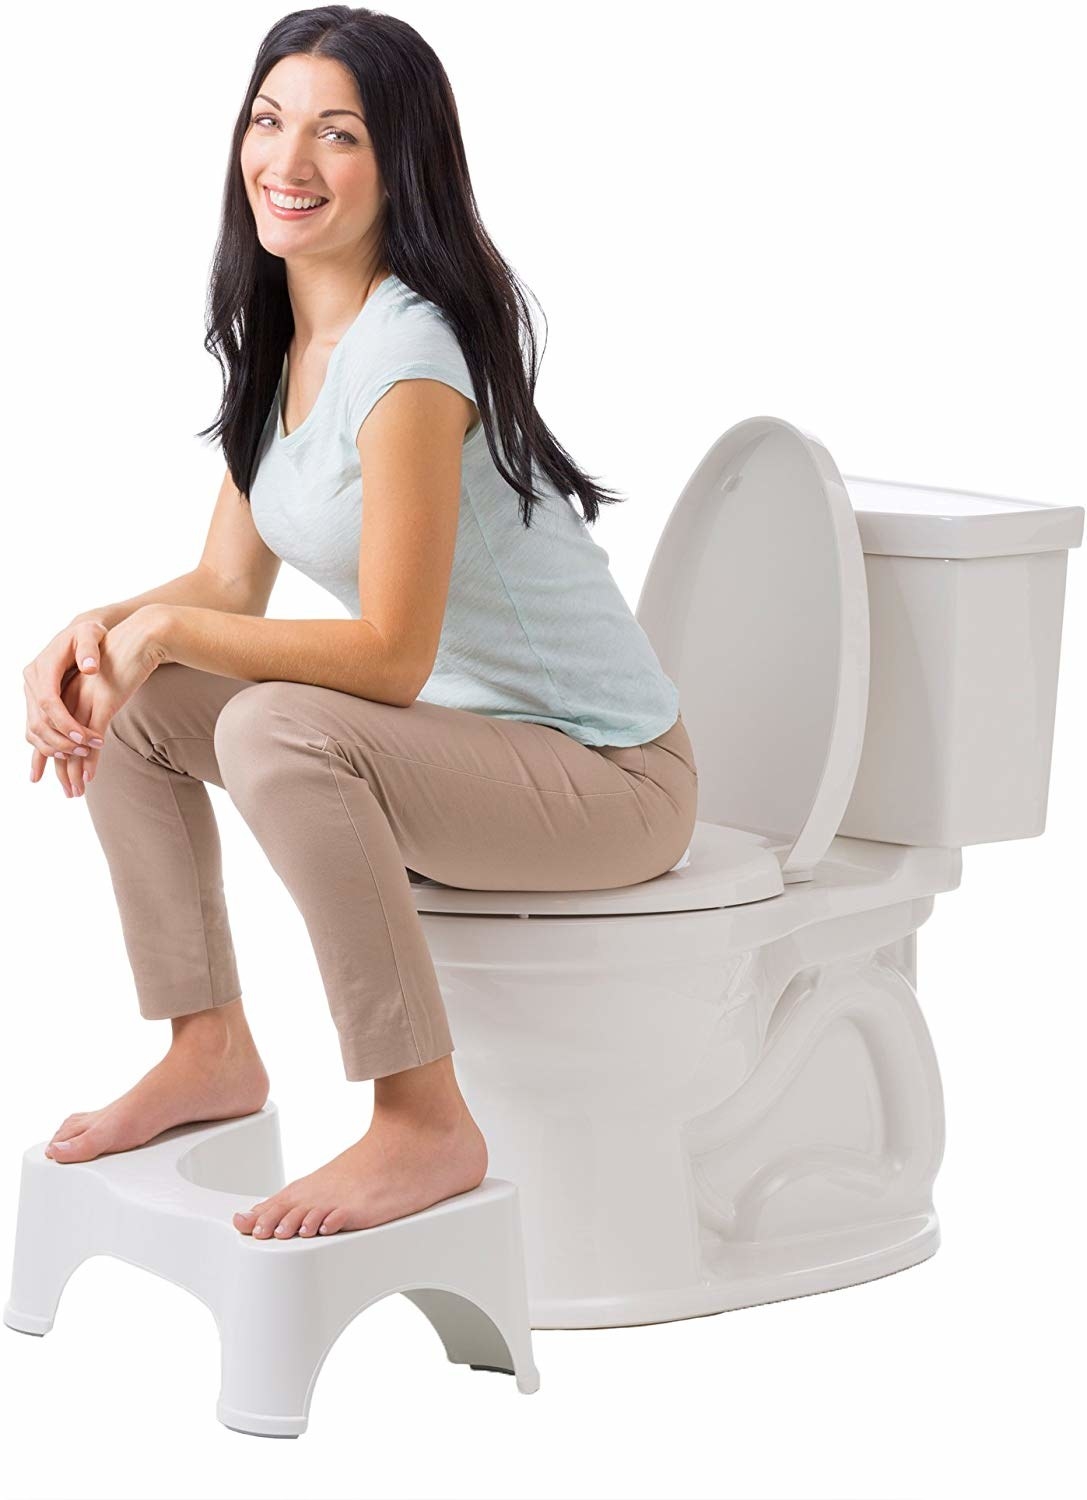 Model sitting on toilet using the squatty pott